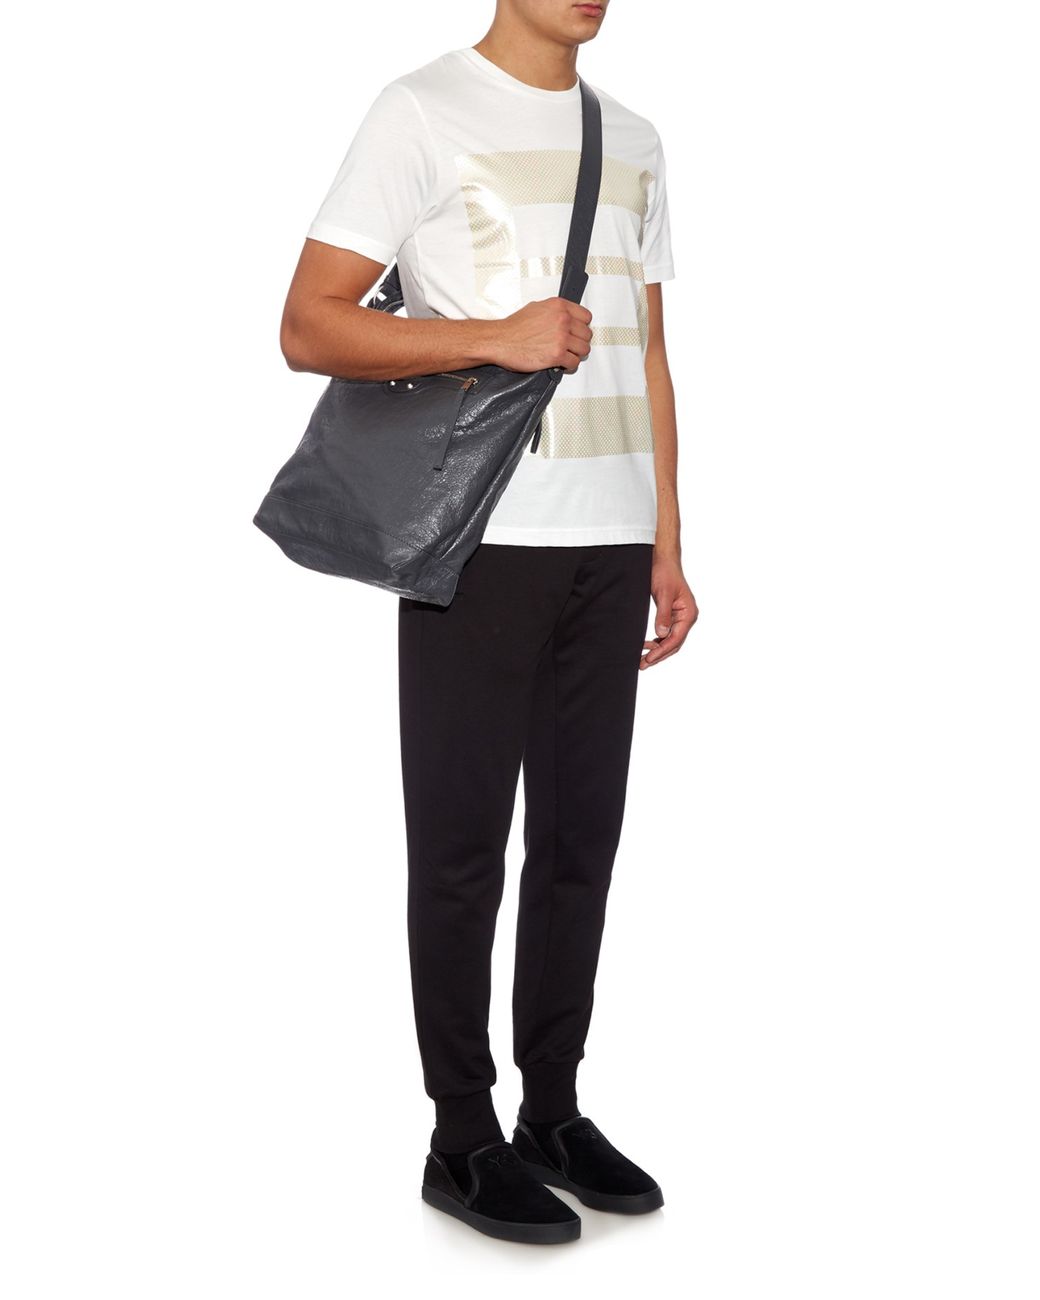 Balenciaga Arena Leather Messenger Bag in Gray for Men | Lyst